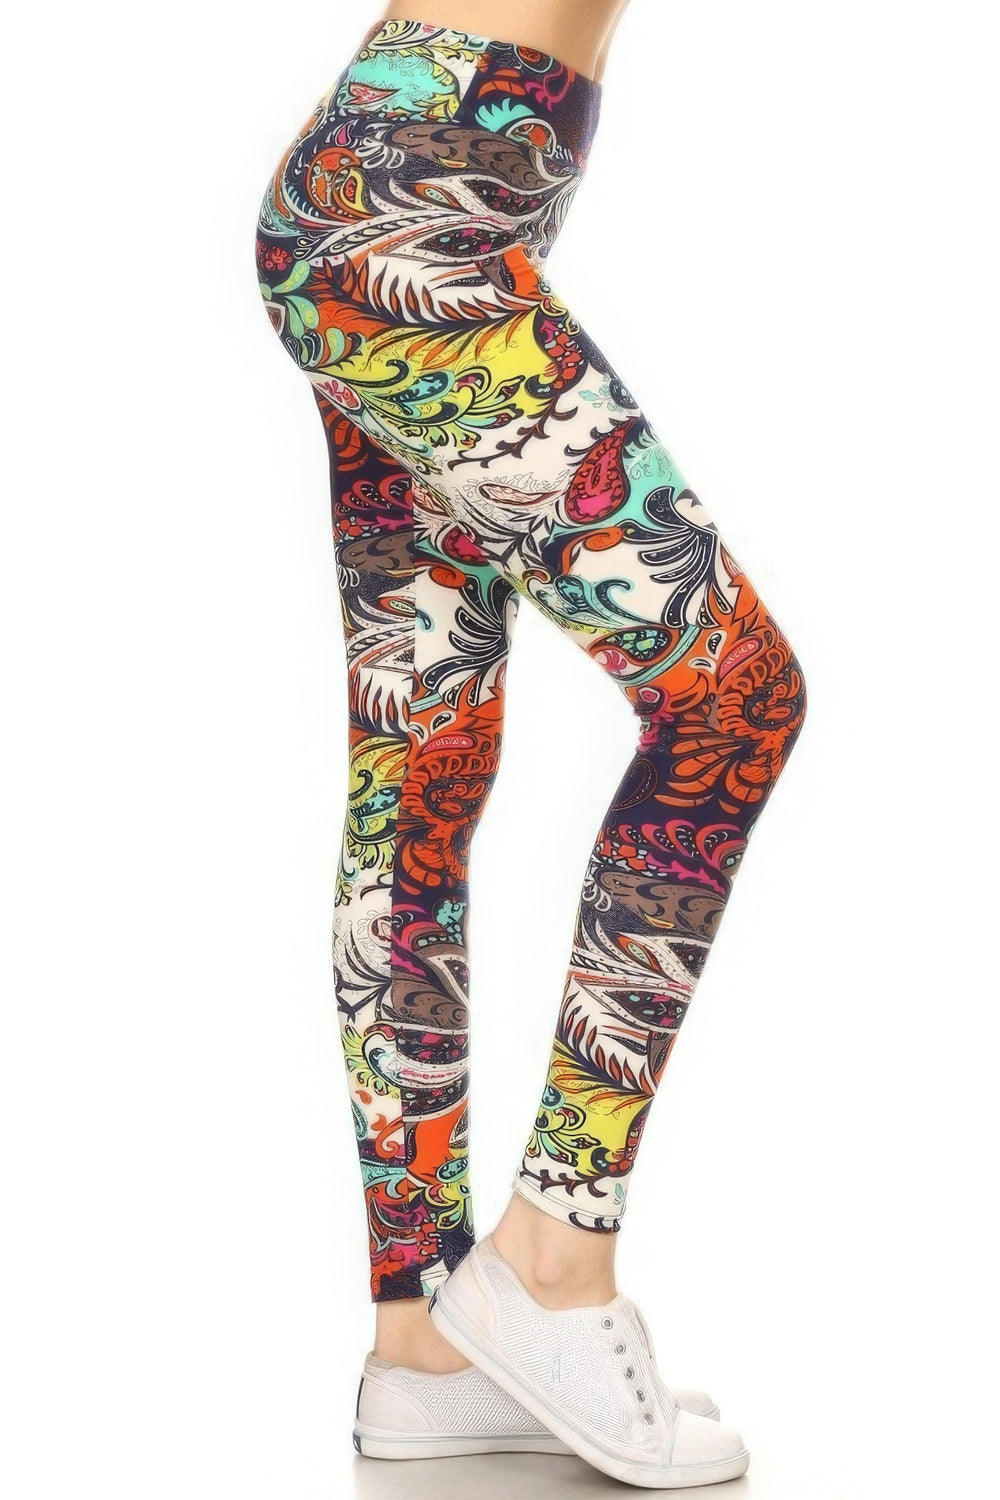 Yoga Style Banded Lined Multicolored Mixed Paisley Print, Full Length Leggings - bertofonsi